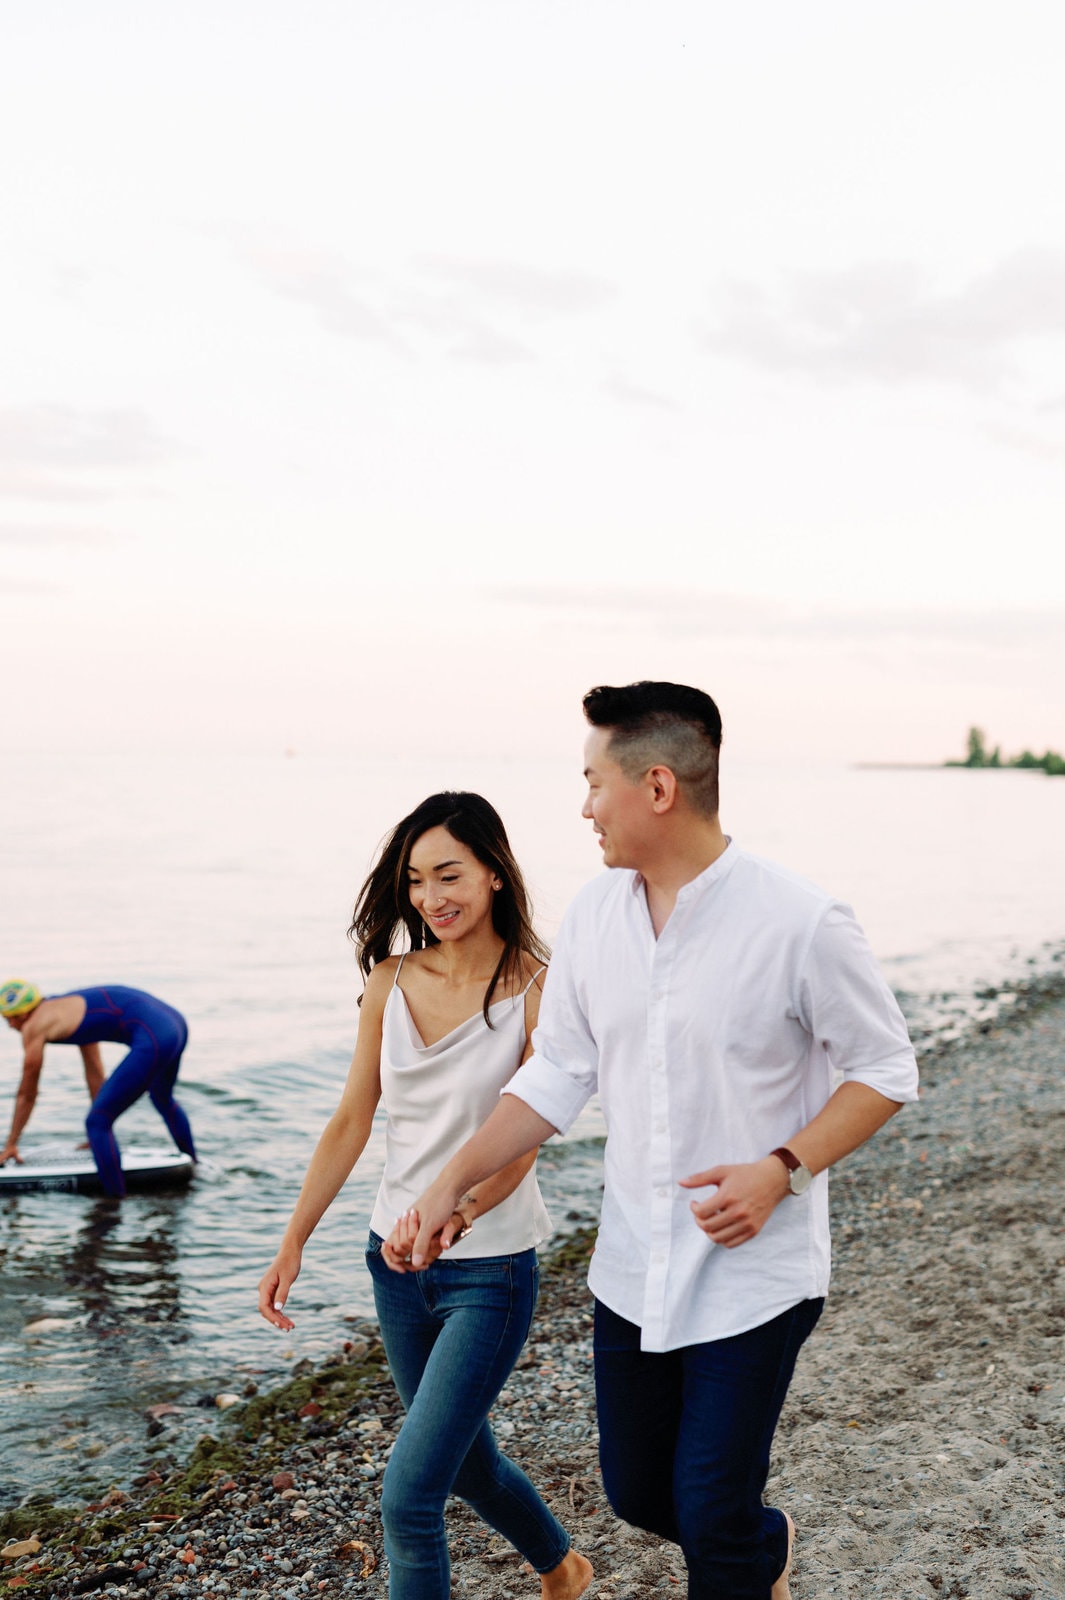 Toronto Beach Engagement Session Couple Walking along Cherry Beach Summer Sunset Romantic Embrace Lifeguard Dock Lake Ontario